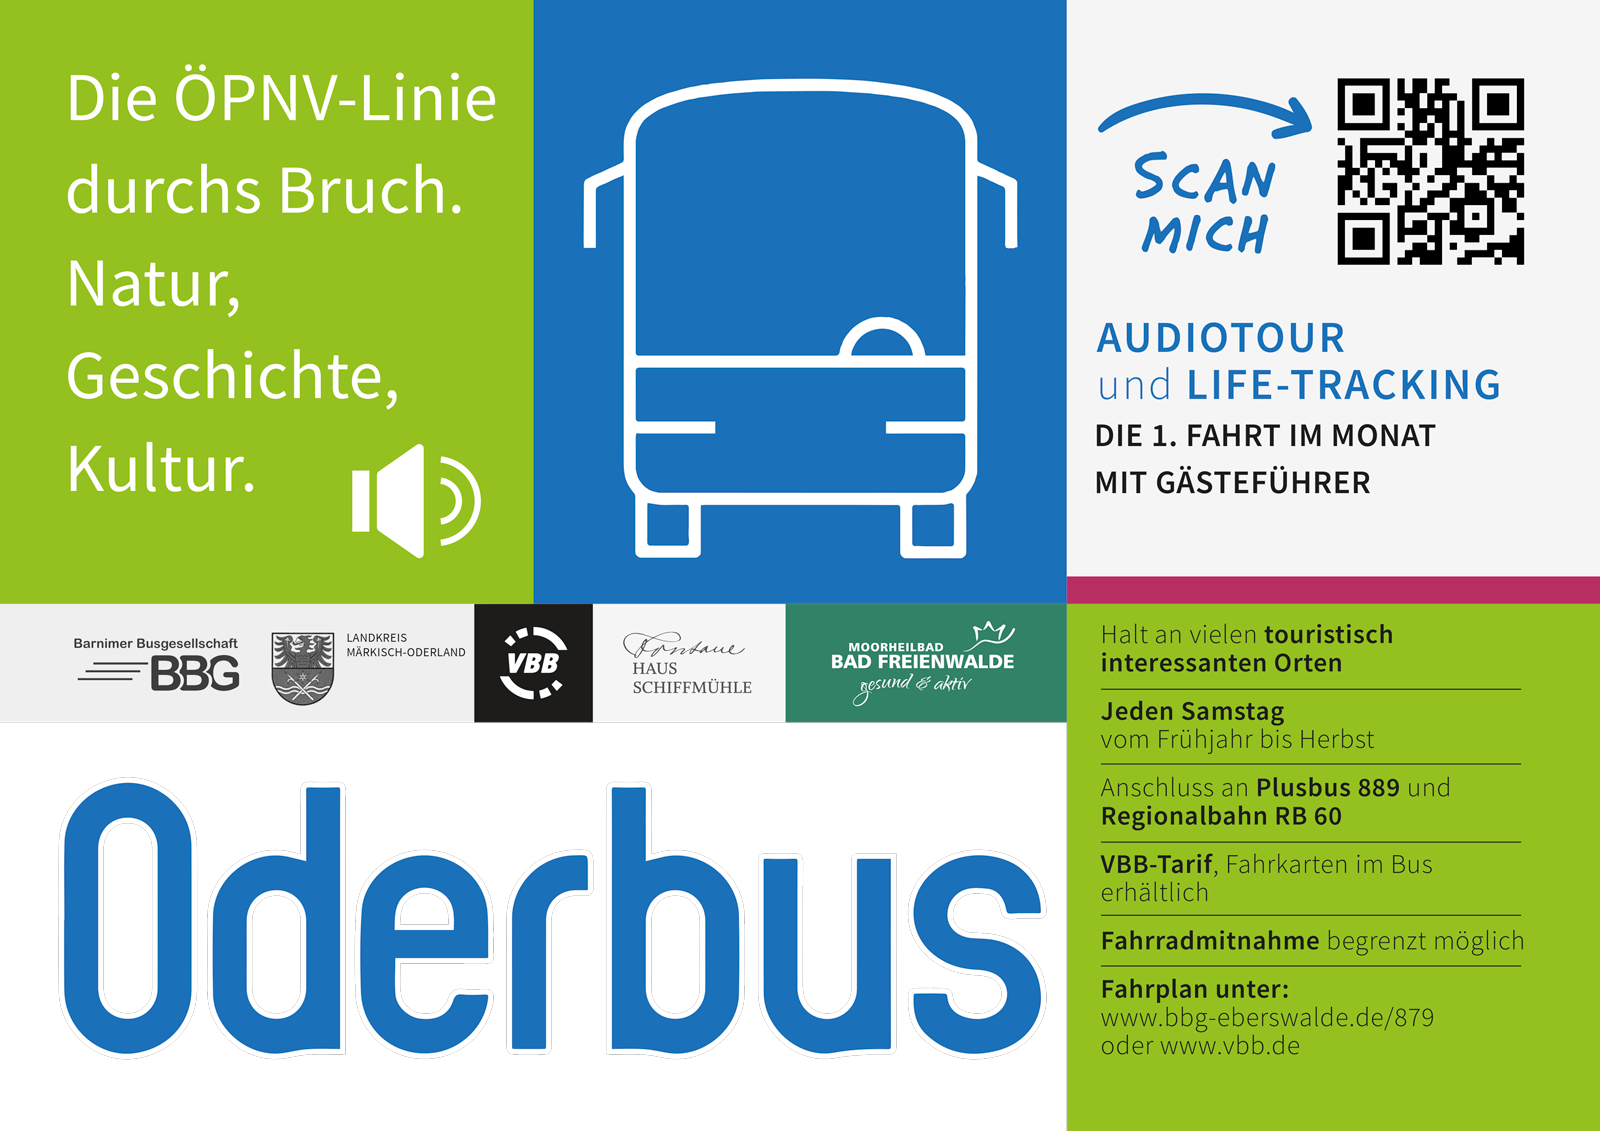 Oderbus info poster